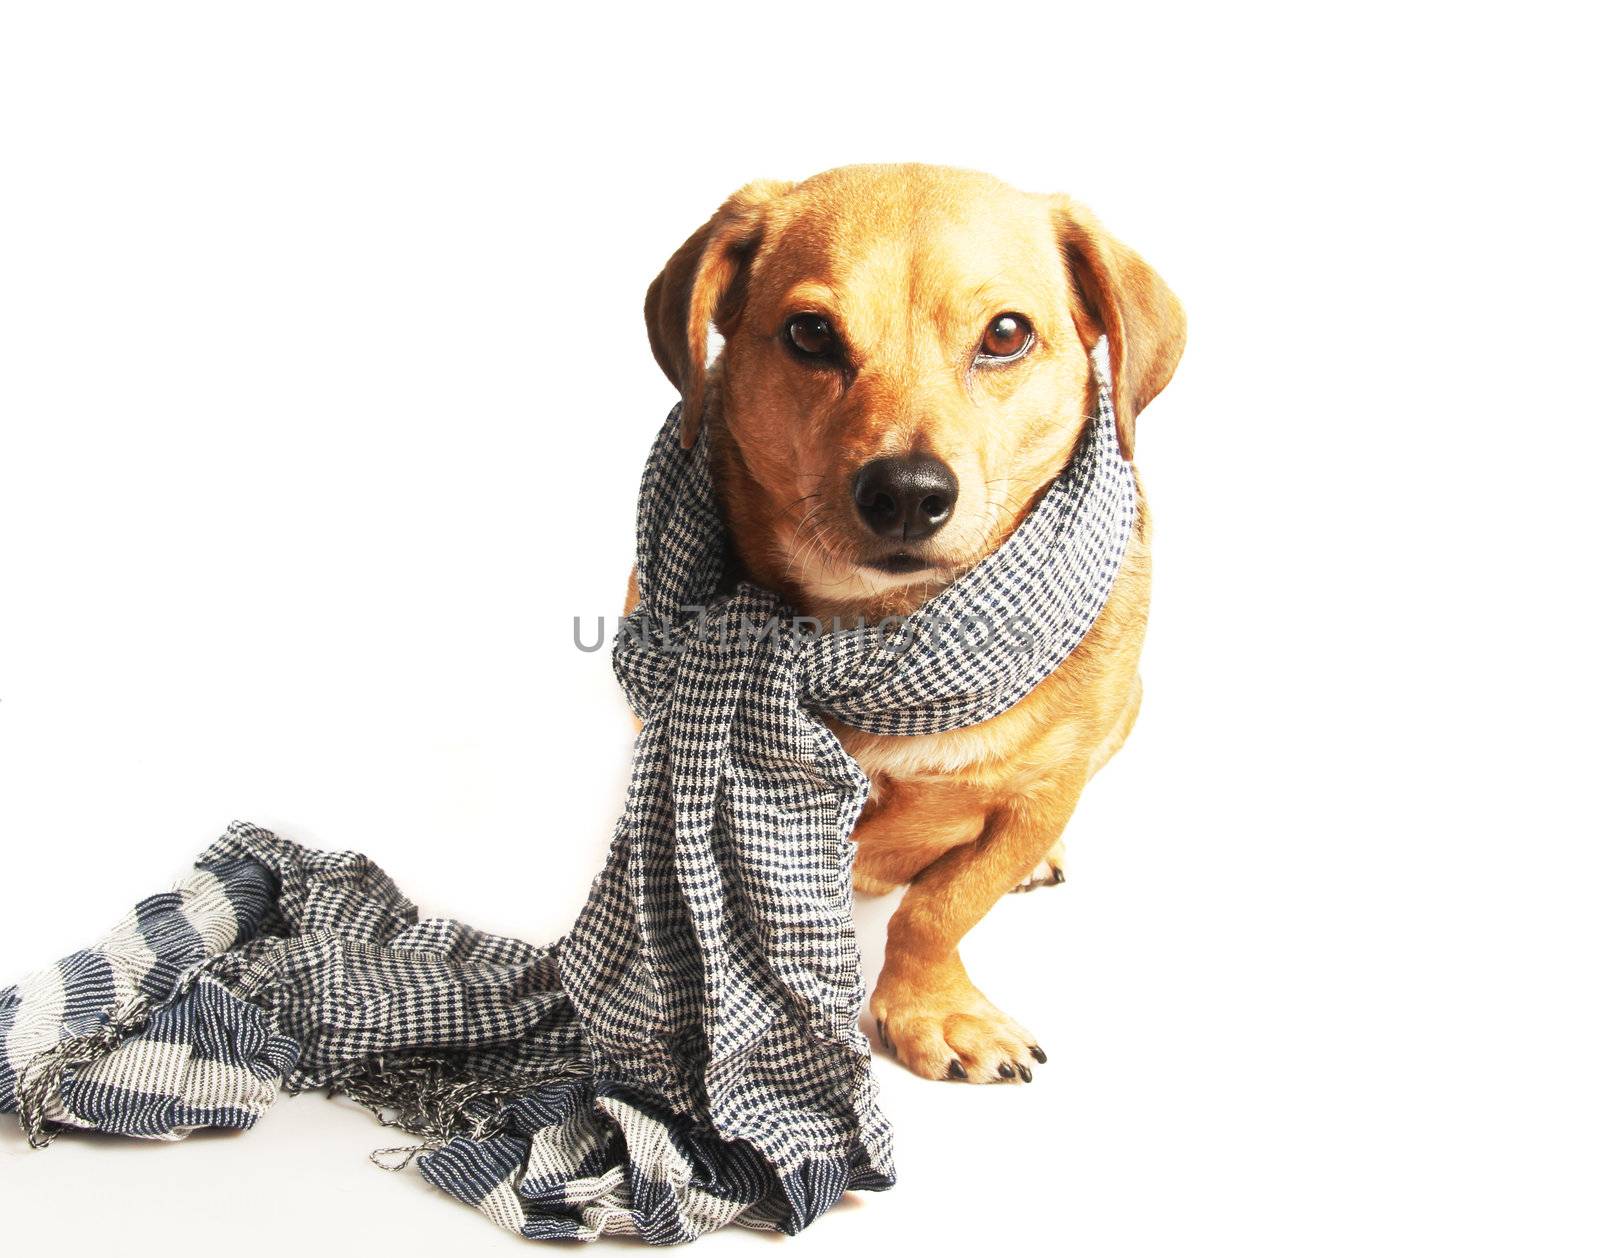 a little dachshund dog with scarf